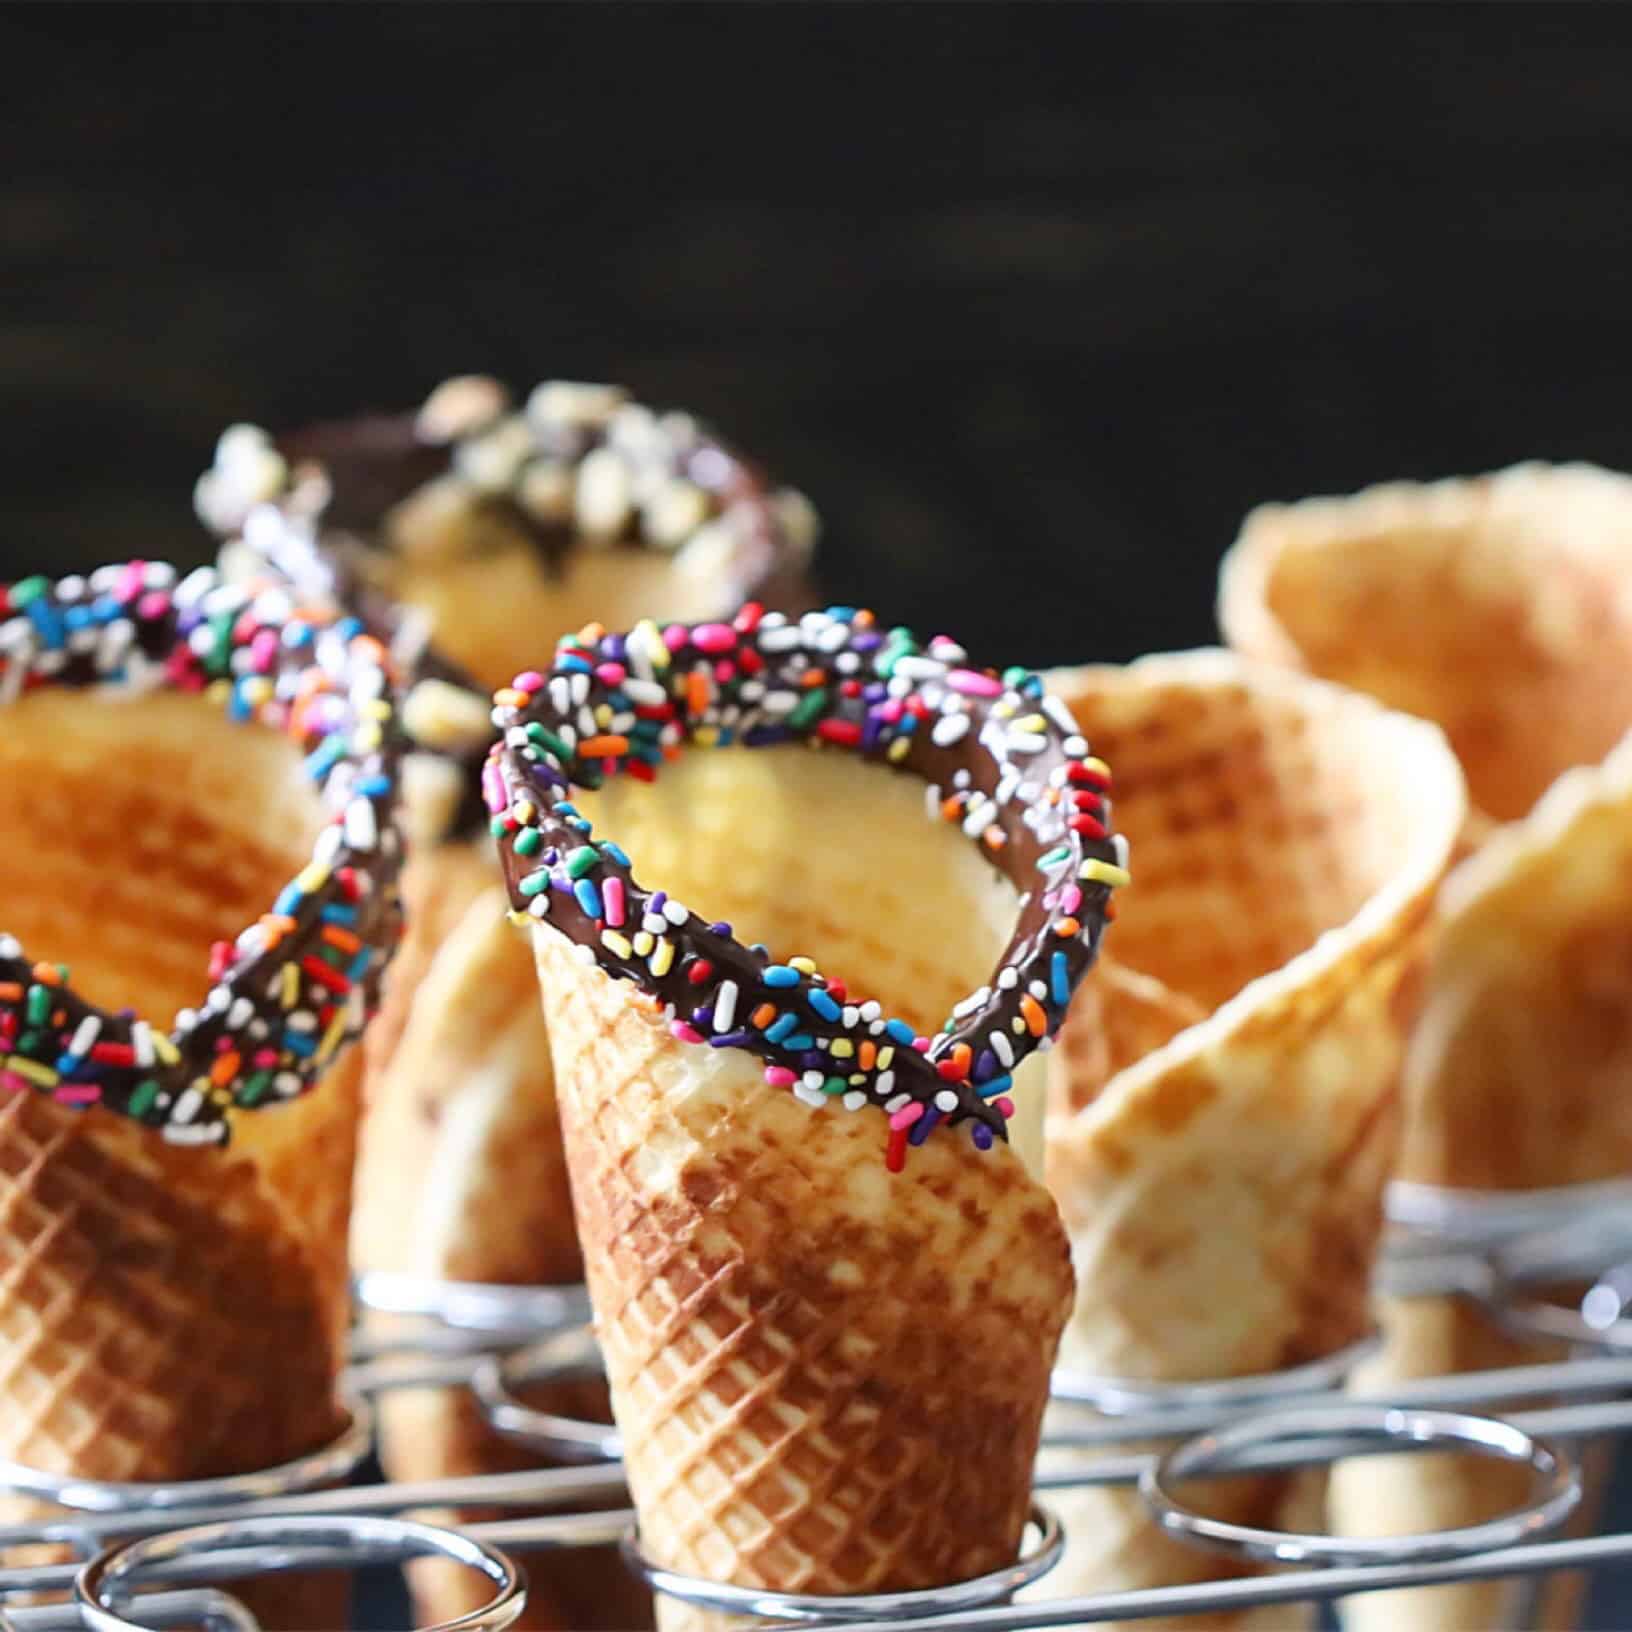 Cucinapro Mini Waffle Ice Cream Cone Maker - Bake 4 Homemade Mini Cones at Once, Black